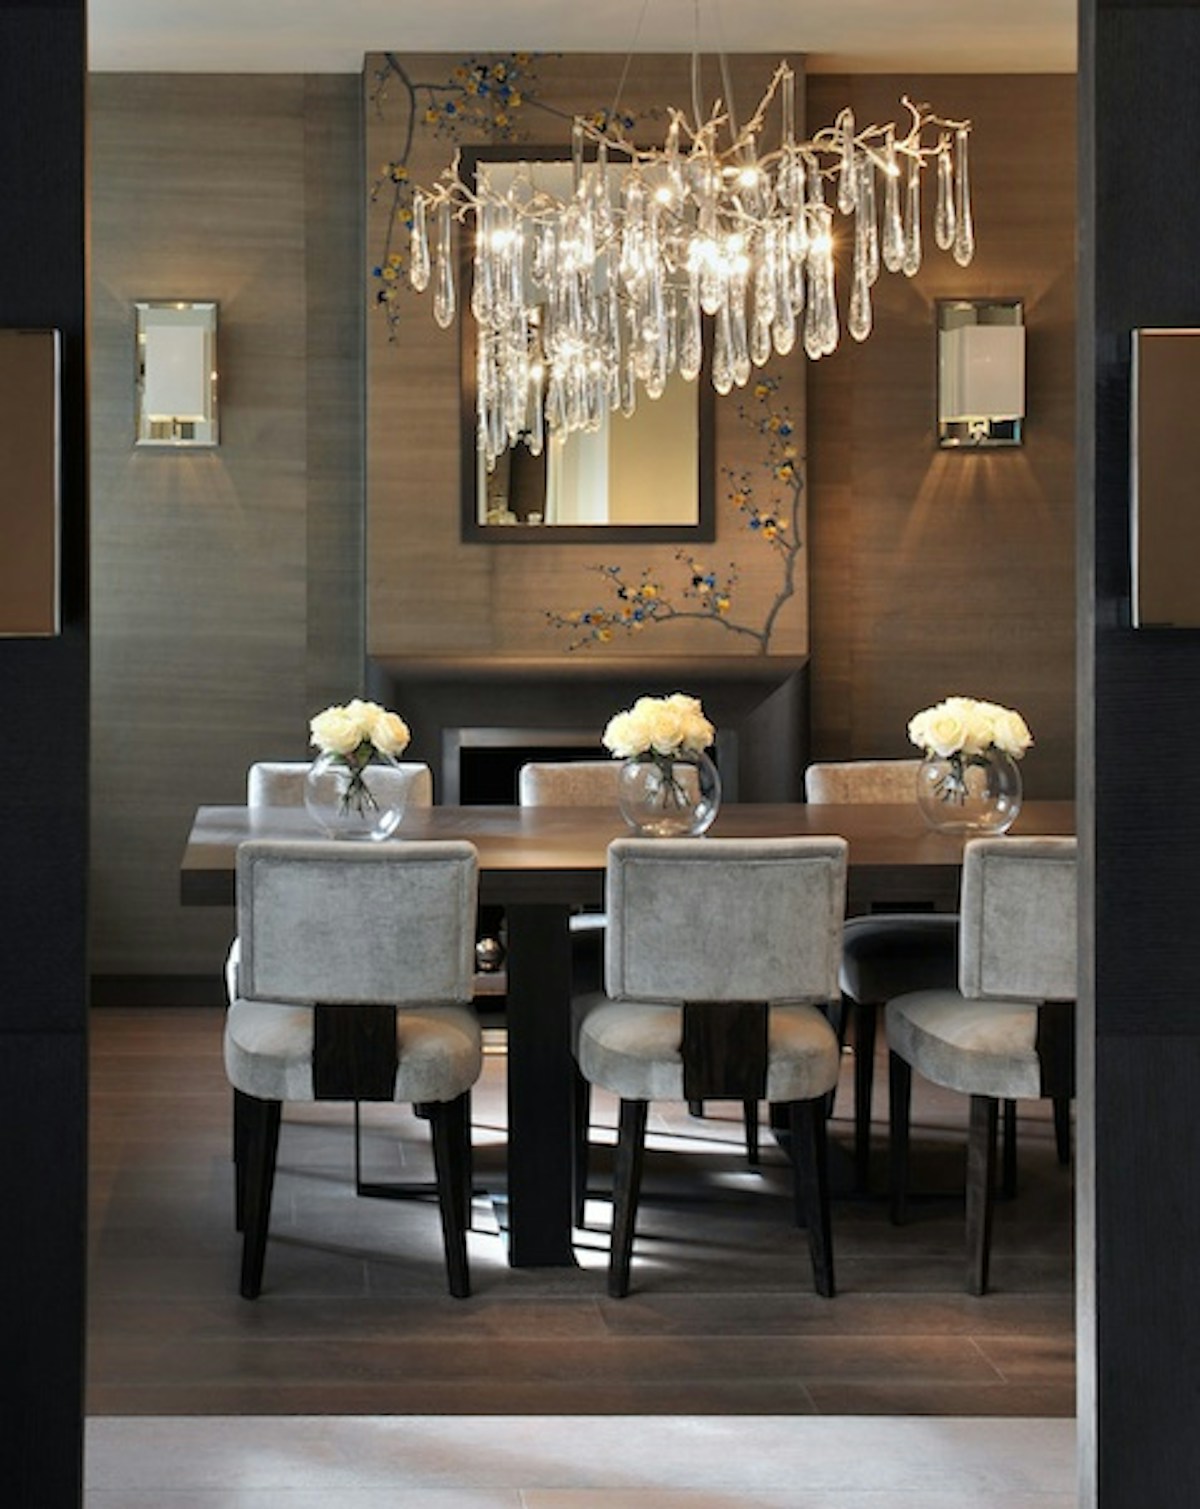 Incorporating Floral Wallpaper Into Your Interior Design | LuxDeco.com Style Guide